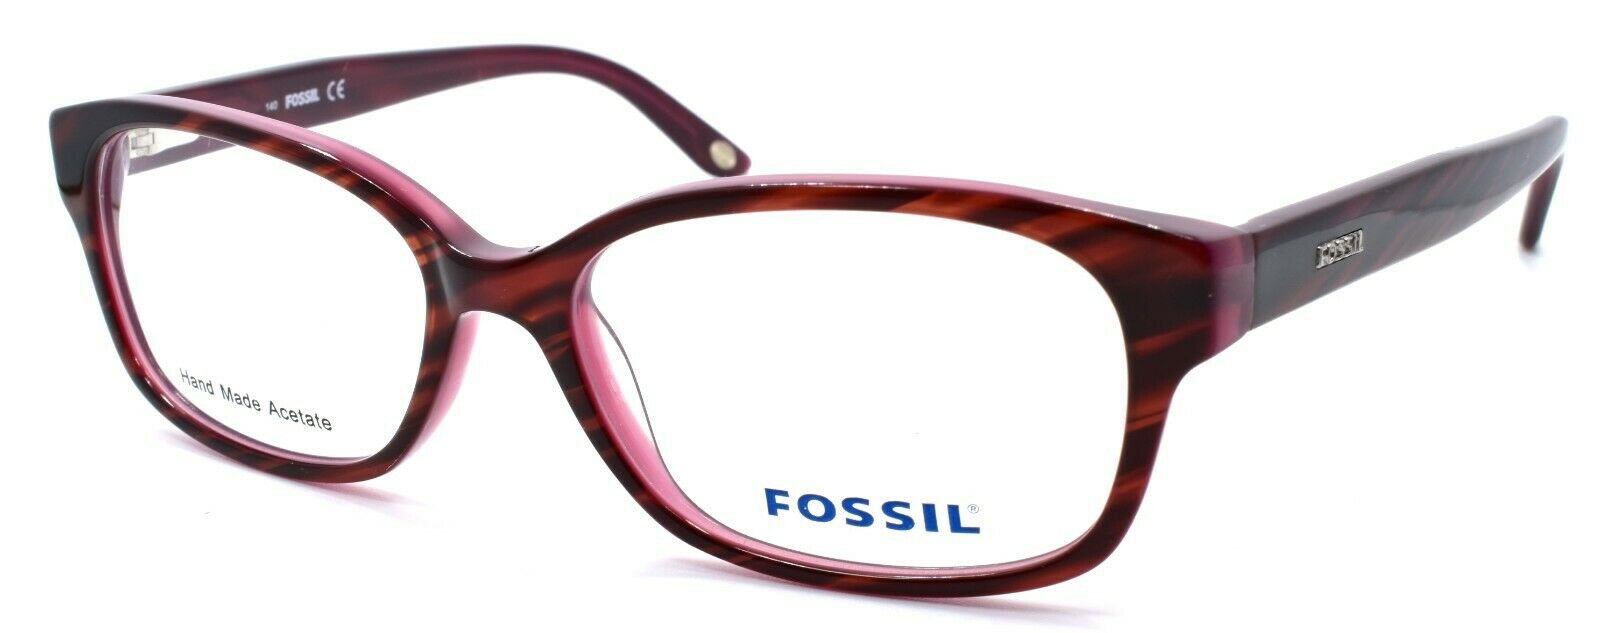 1-Fossil Tarik 0JAM Women's Eyeglasses Frames 53-16-140 Dark Horn Violet-716737373019-IKSpecs